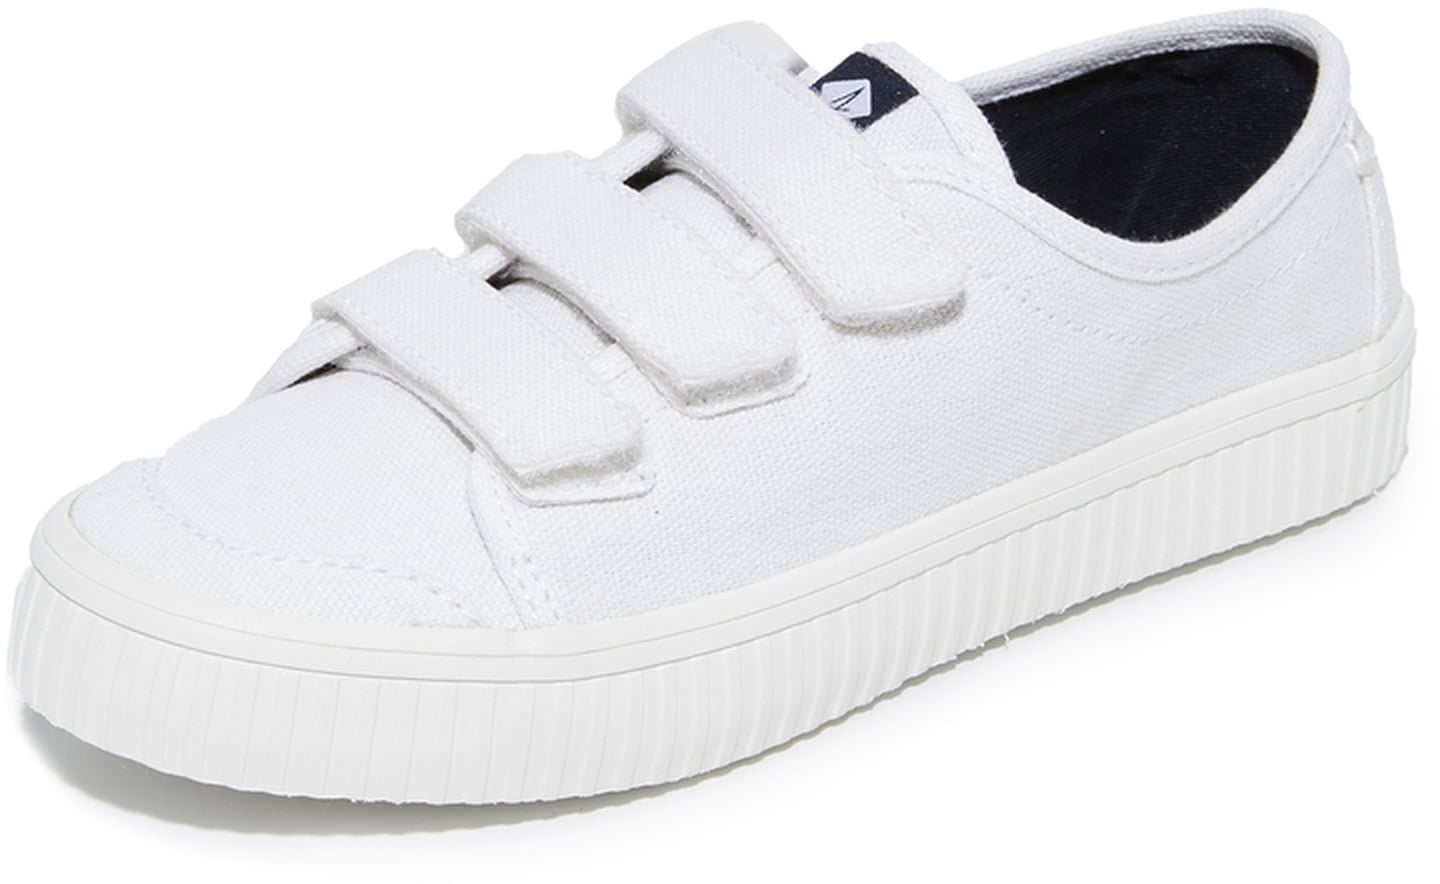 Selena Gomez's White Velcro Sneakers | POPSUGAR Fashion